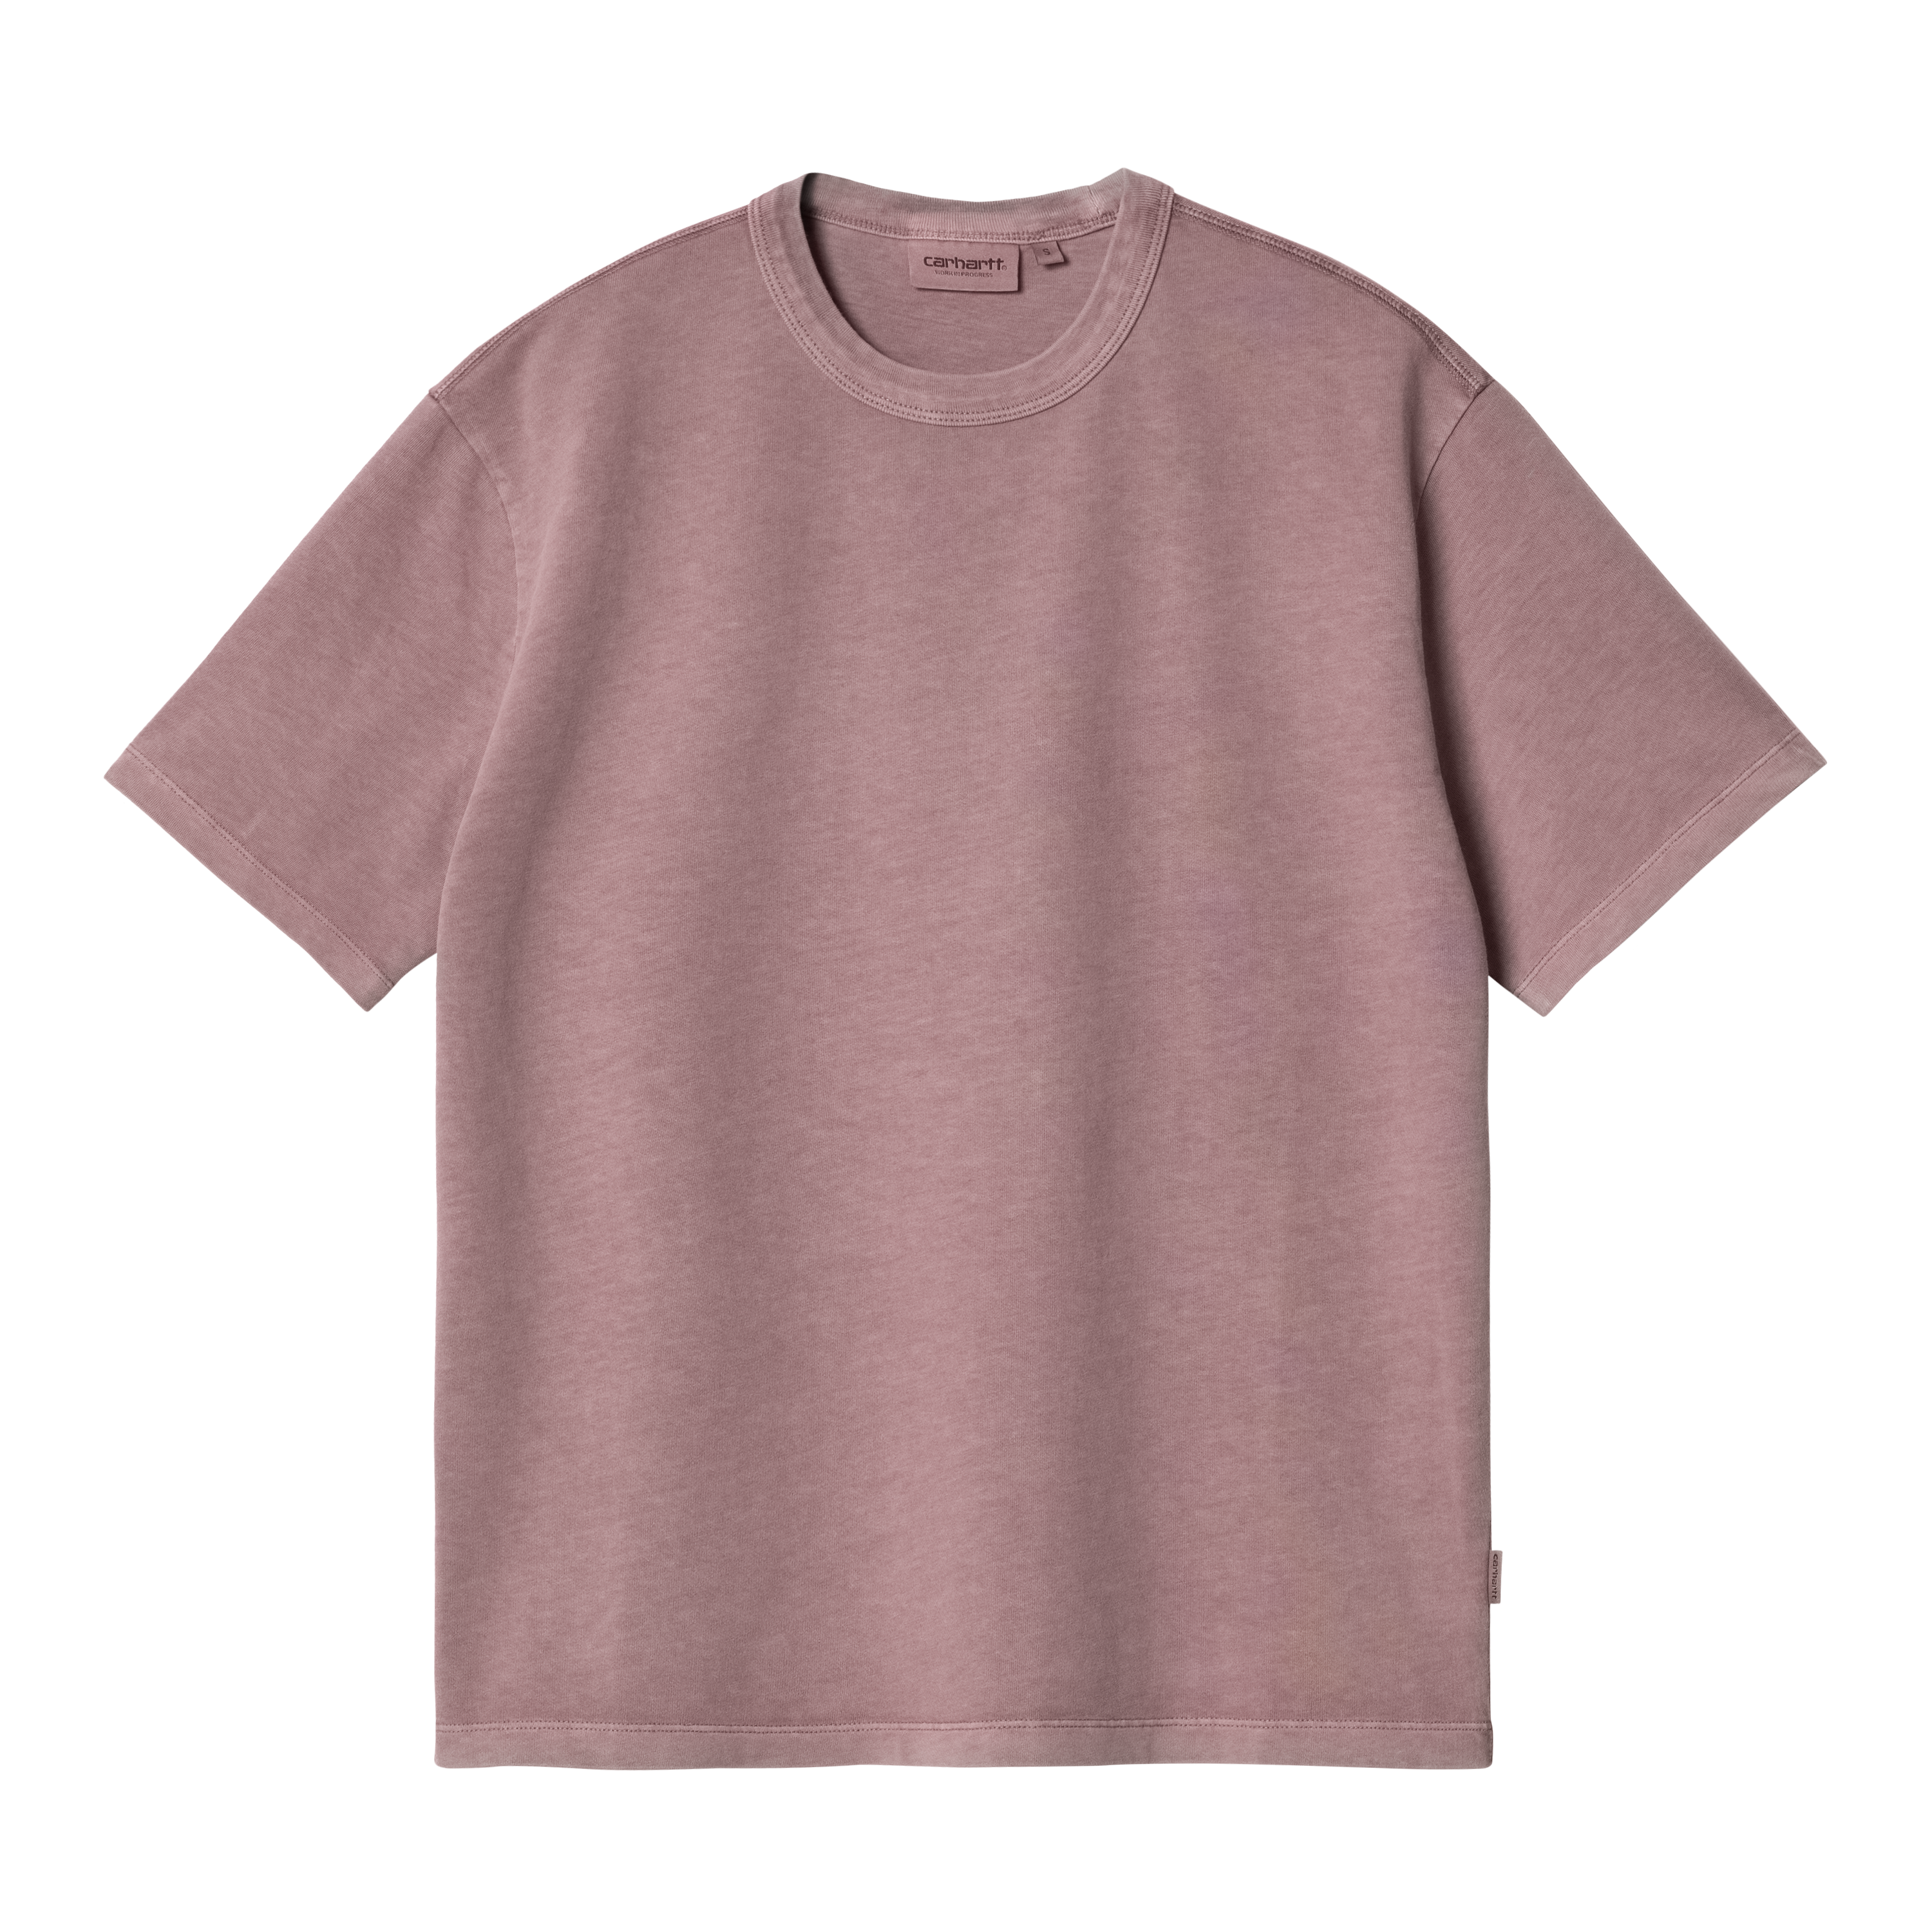 Carhartt WIP Women’s Short Sleeve Taos T-Shirt in Rosa